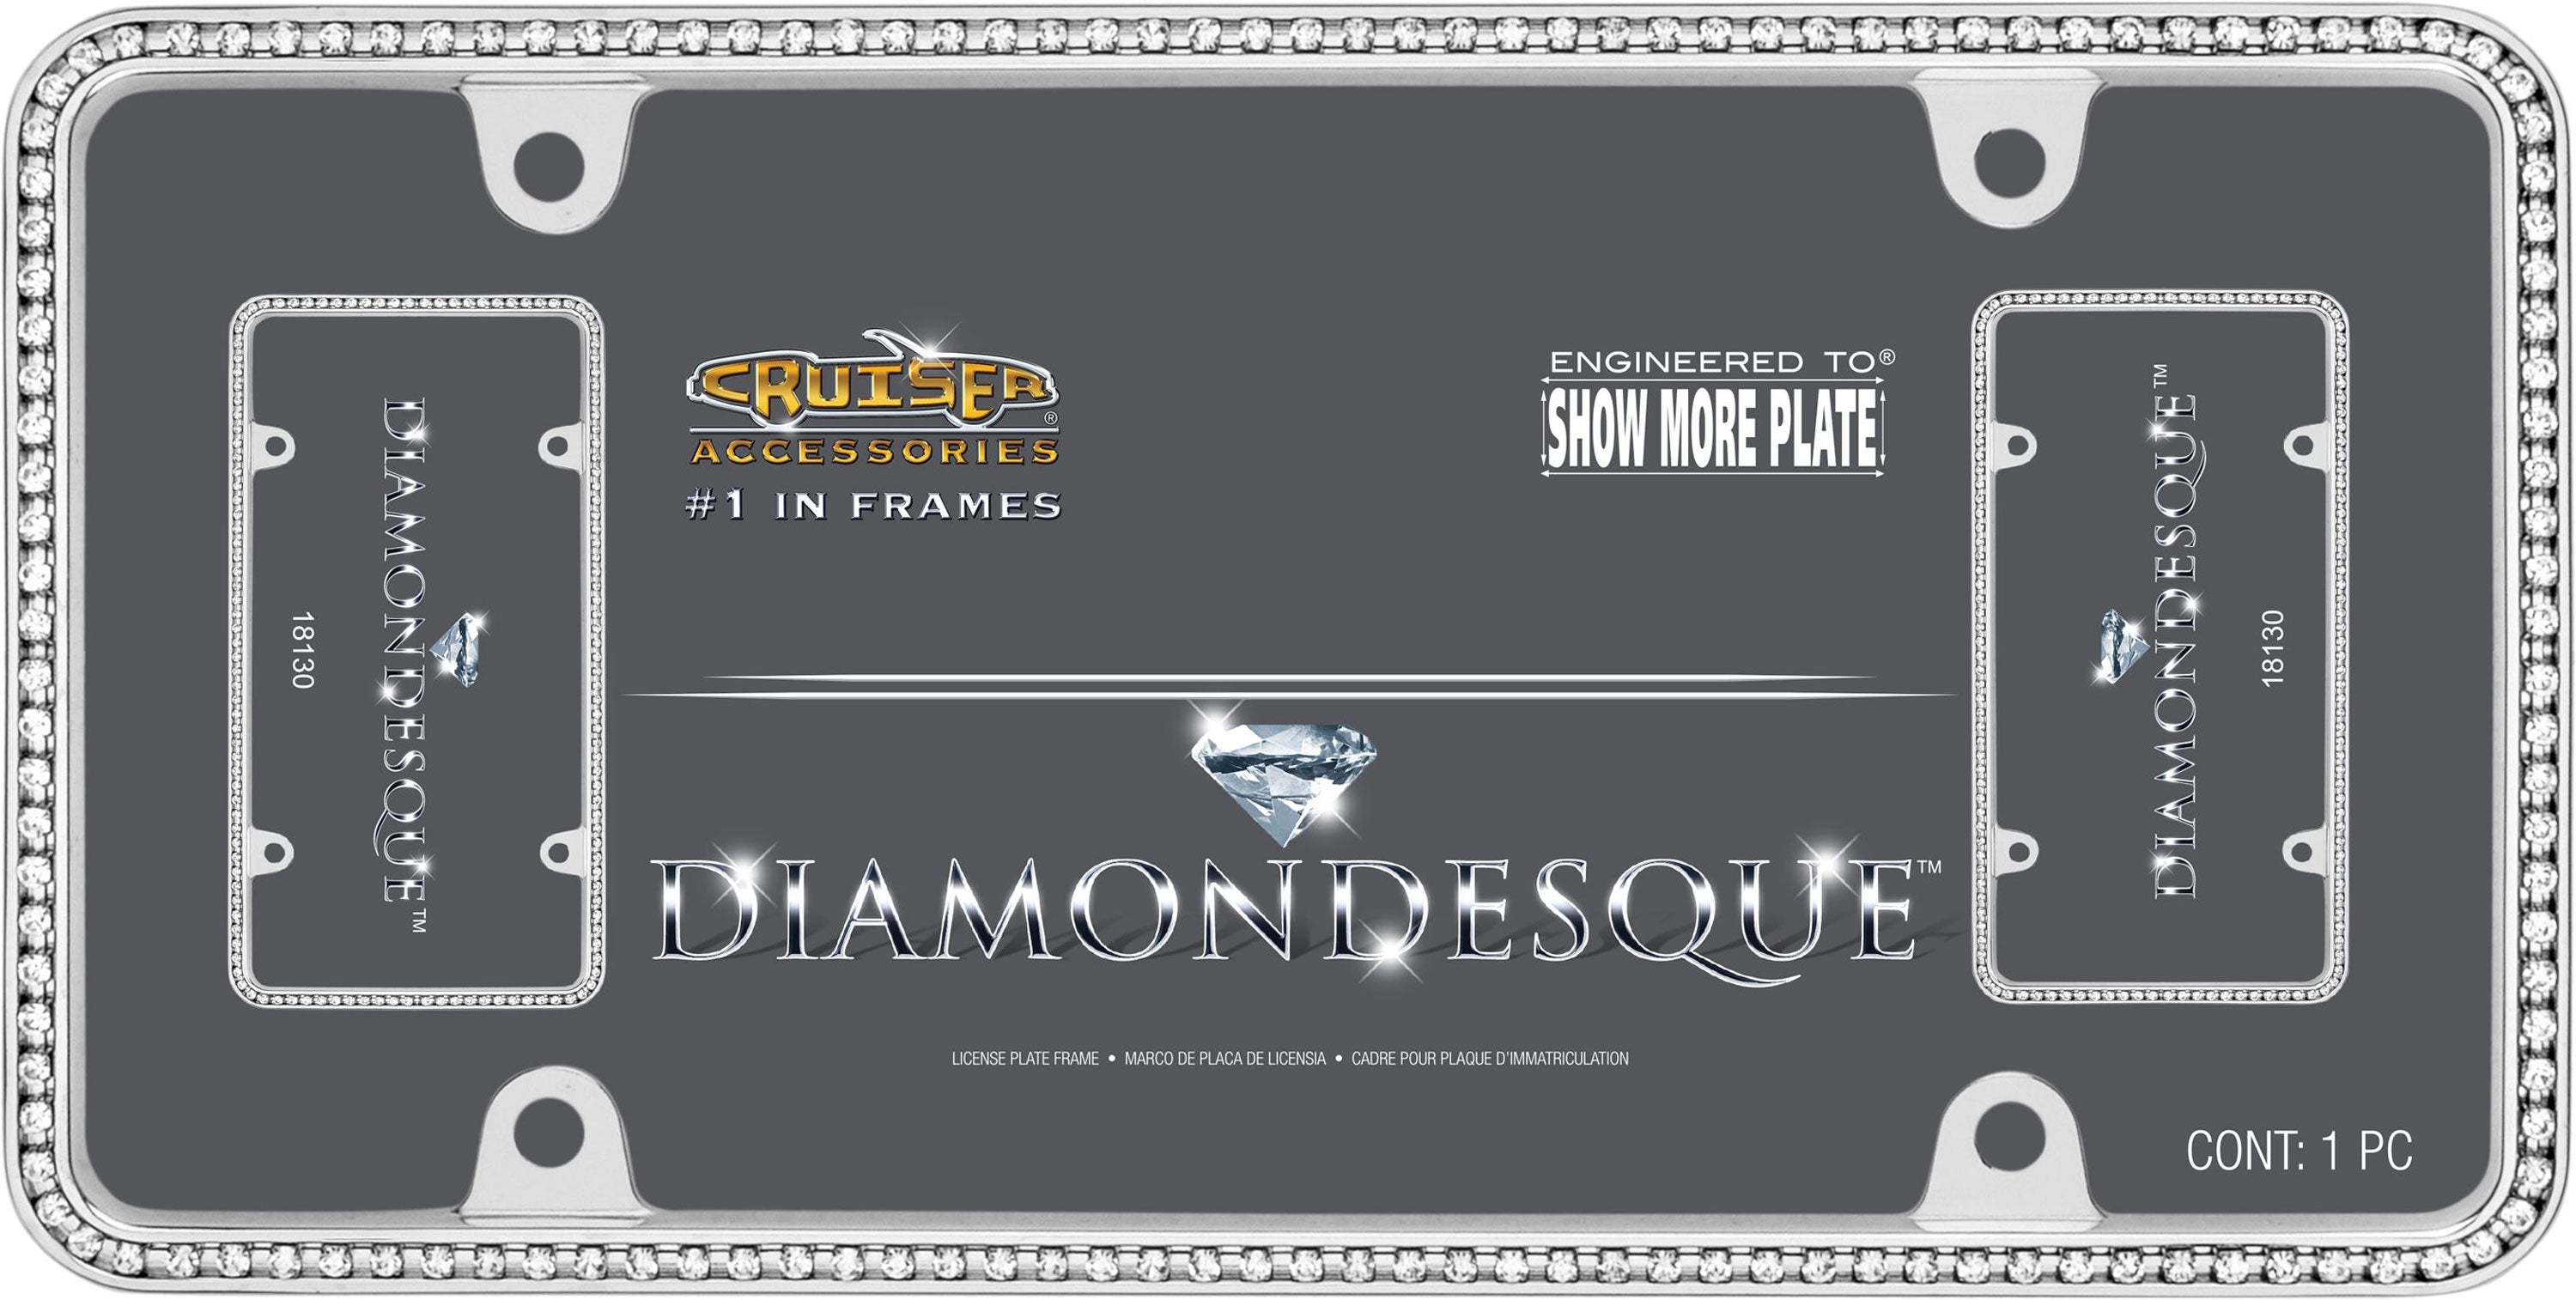 Cruiser Accessories 18130 License Plate Frame - Diamondesque, Metal